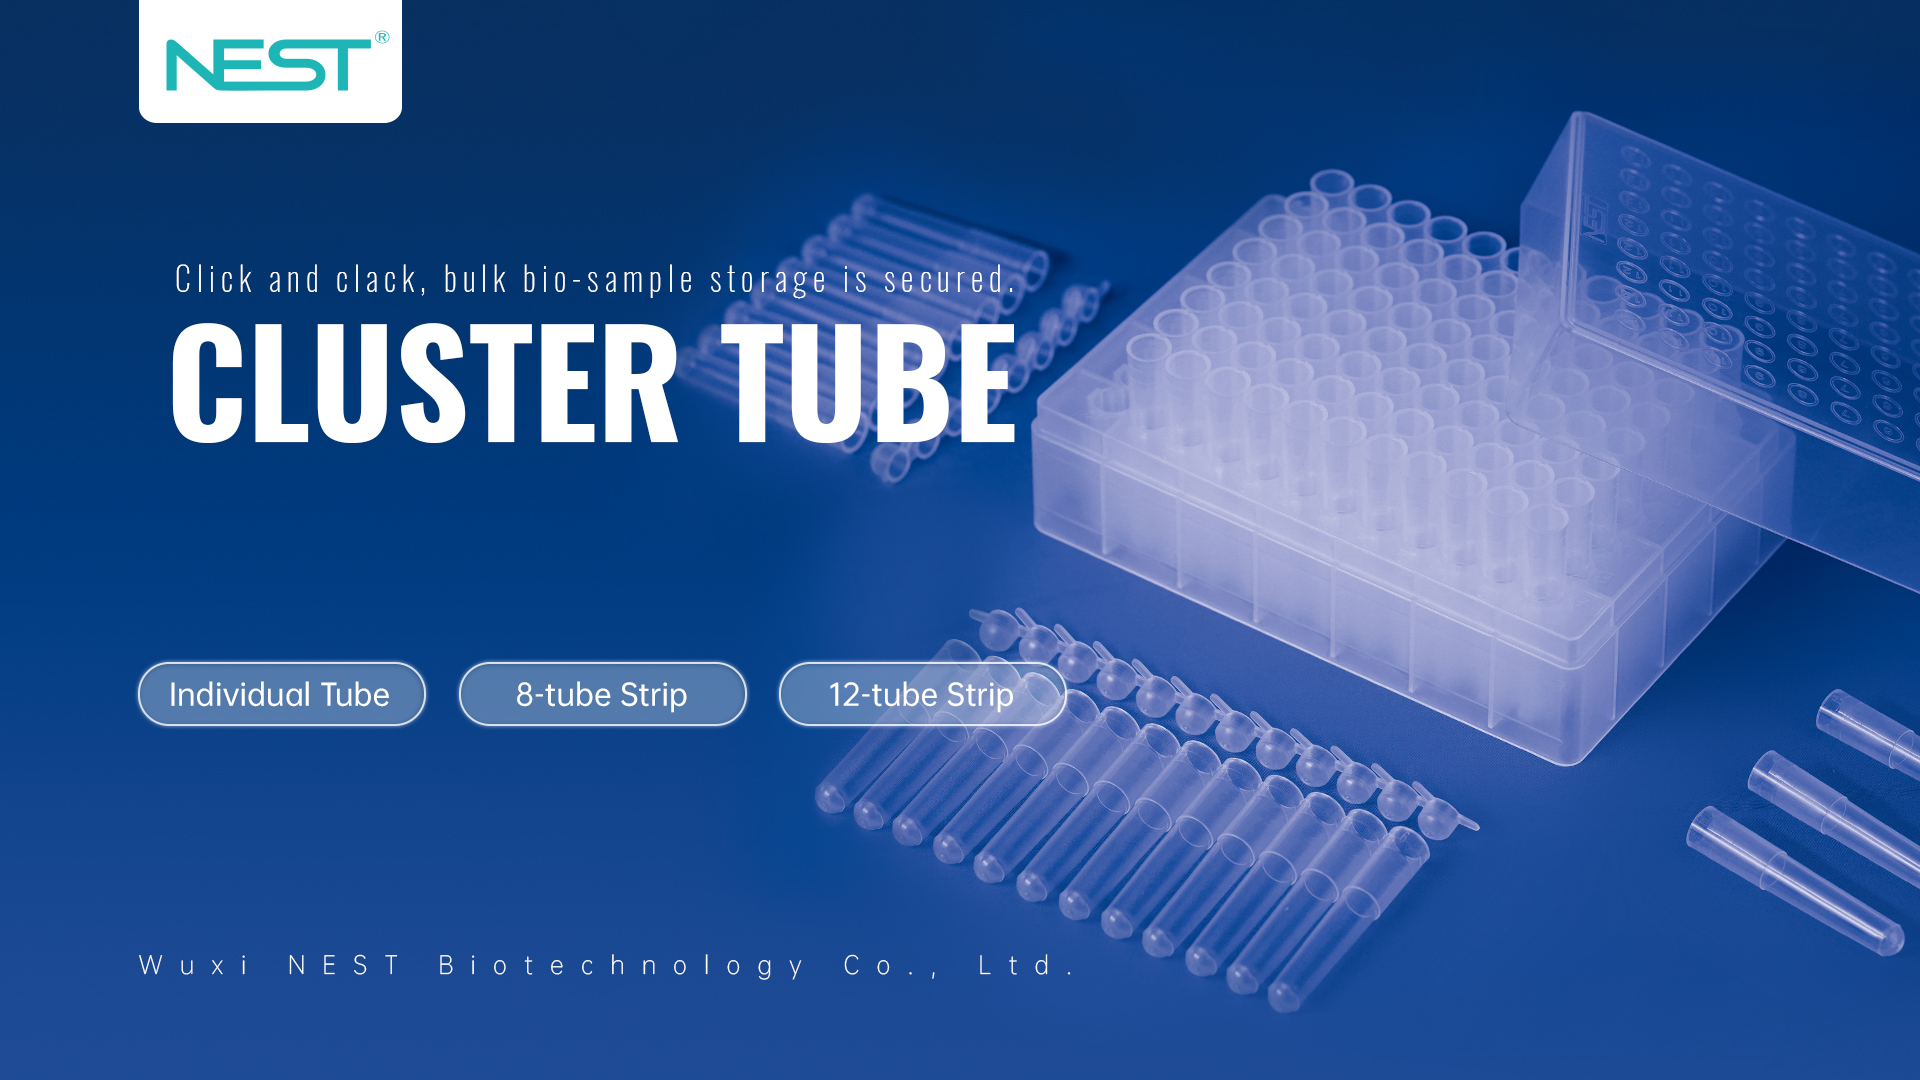 Secure Bulk Sample Storage with NEST Cluster Tube